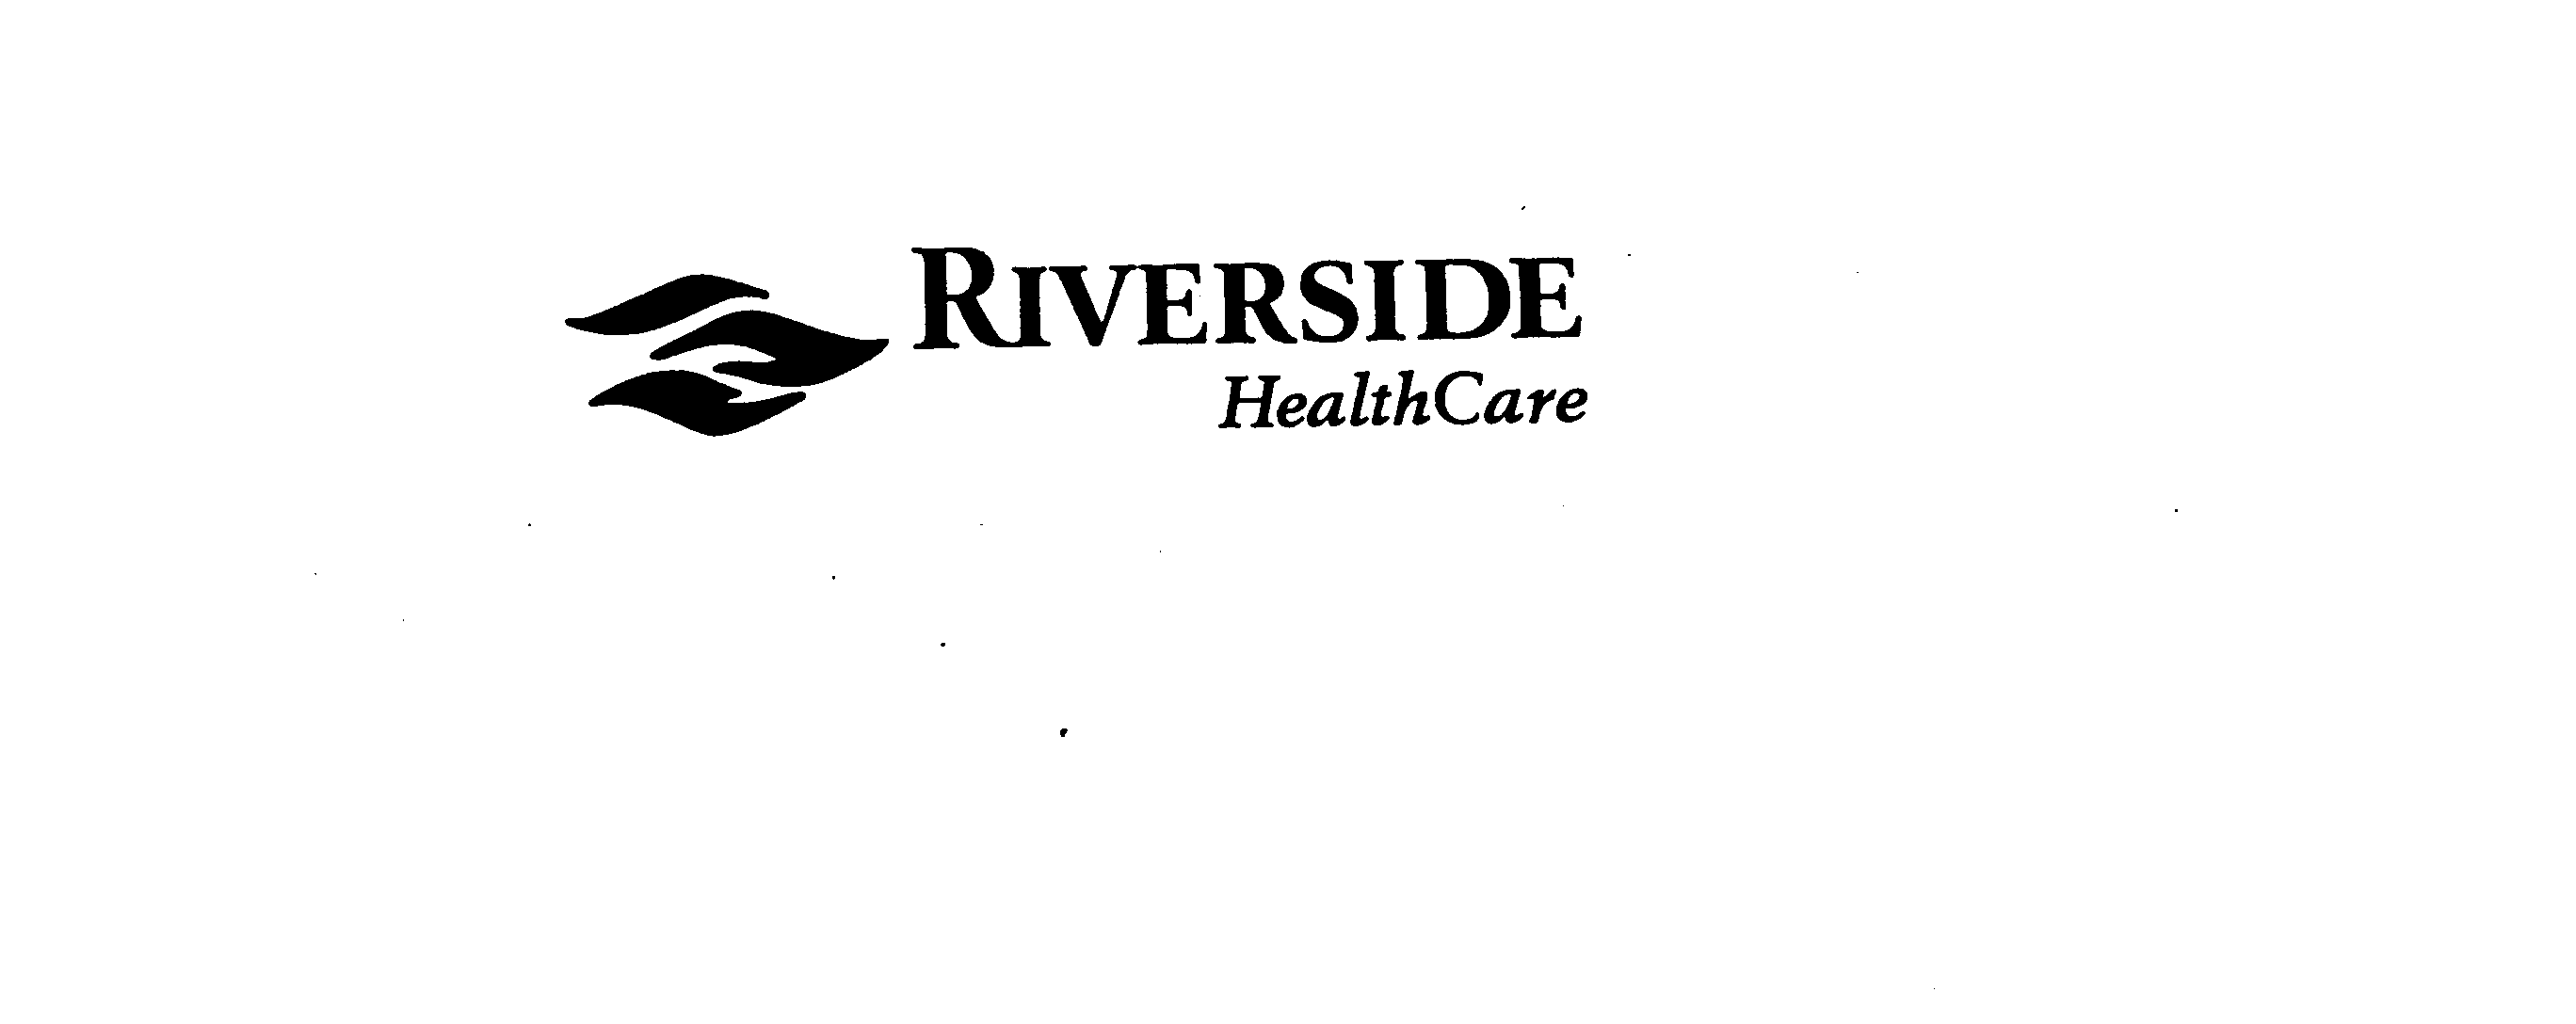  RIVERSIDE HEALTHCARE